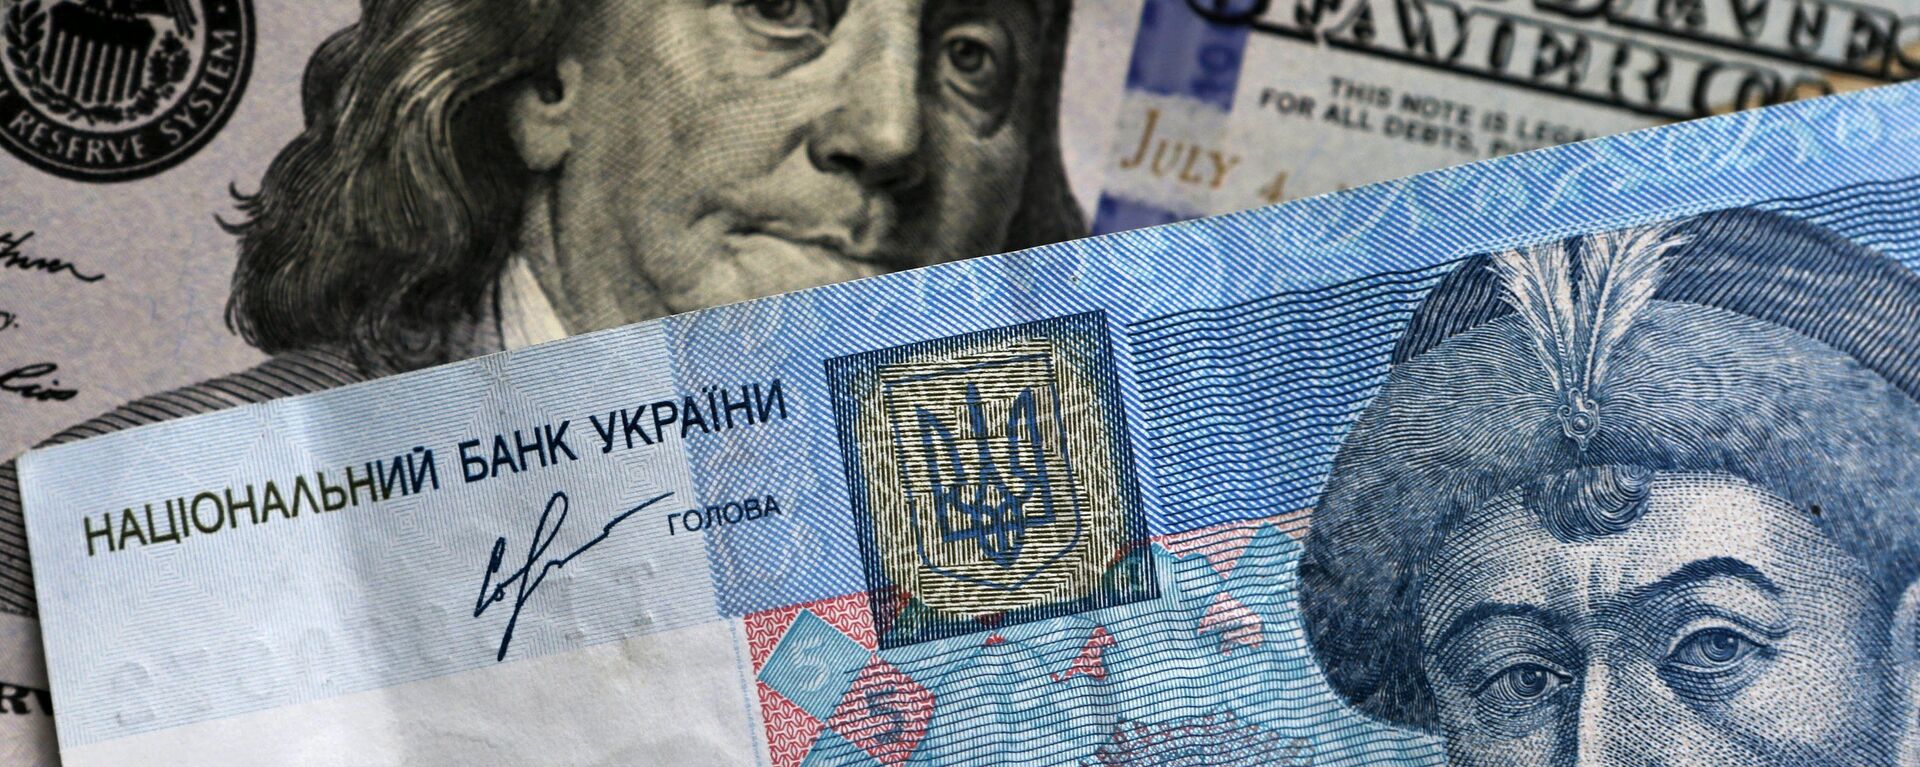 US and Ukrainian notes and coins - Sputnik International, 1920, 13.08.2022